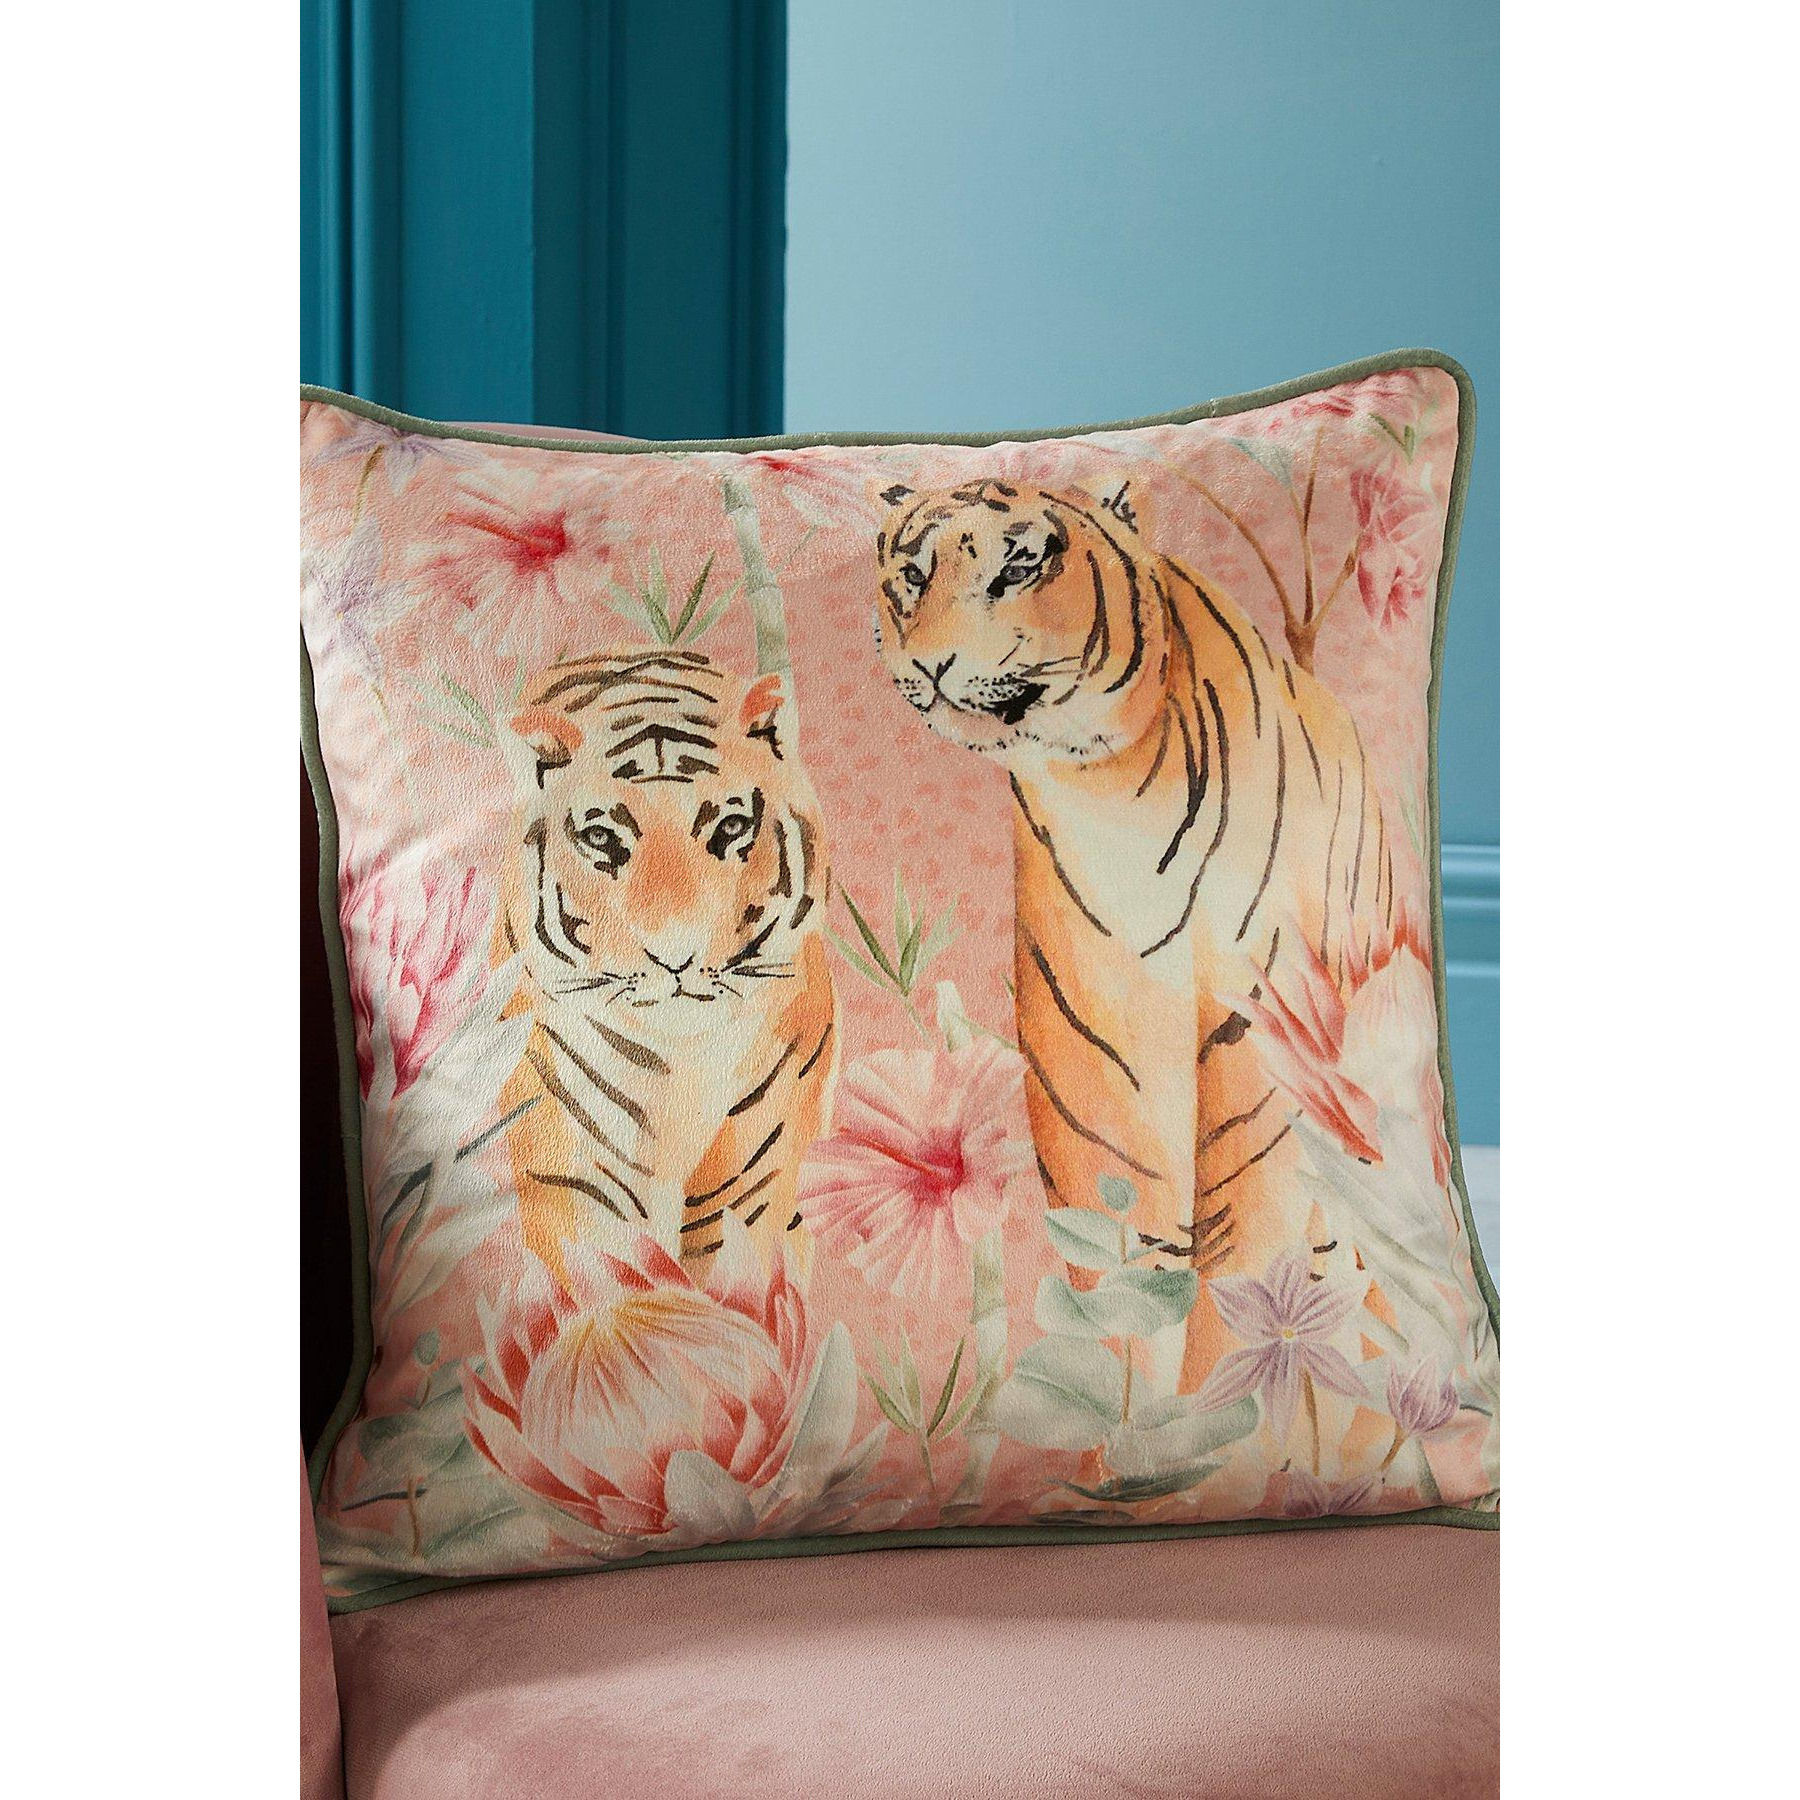 'Tropical Leopard' Velvet Filled Cushion - image 1